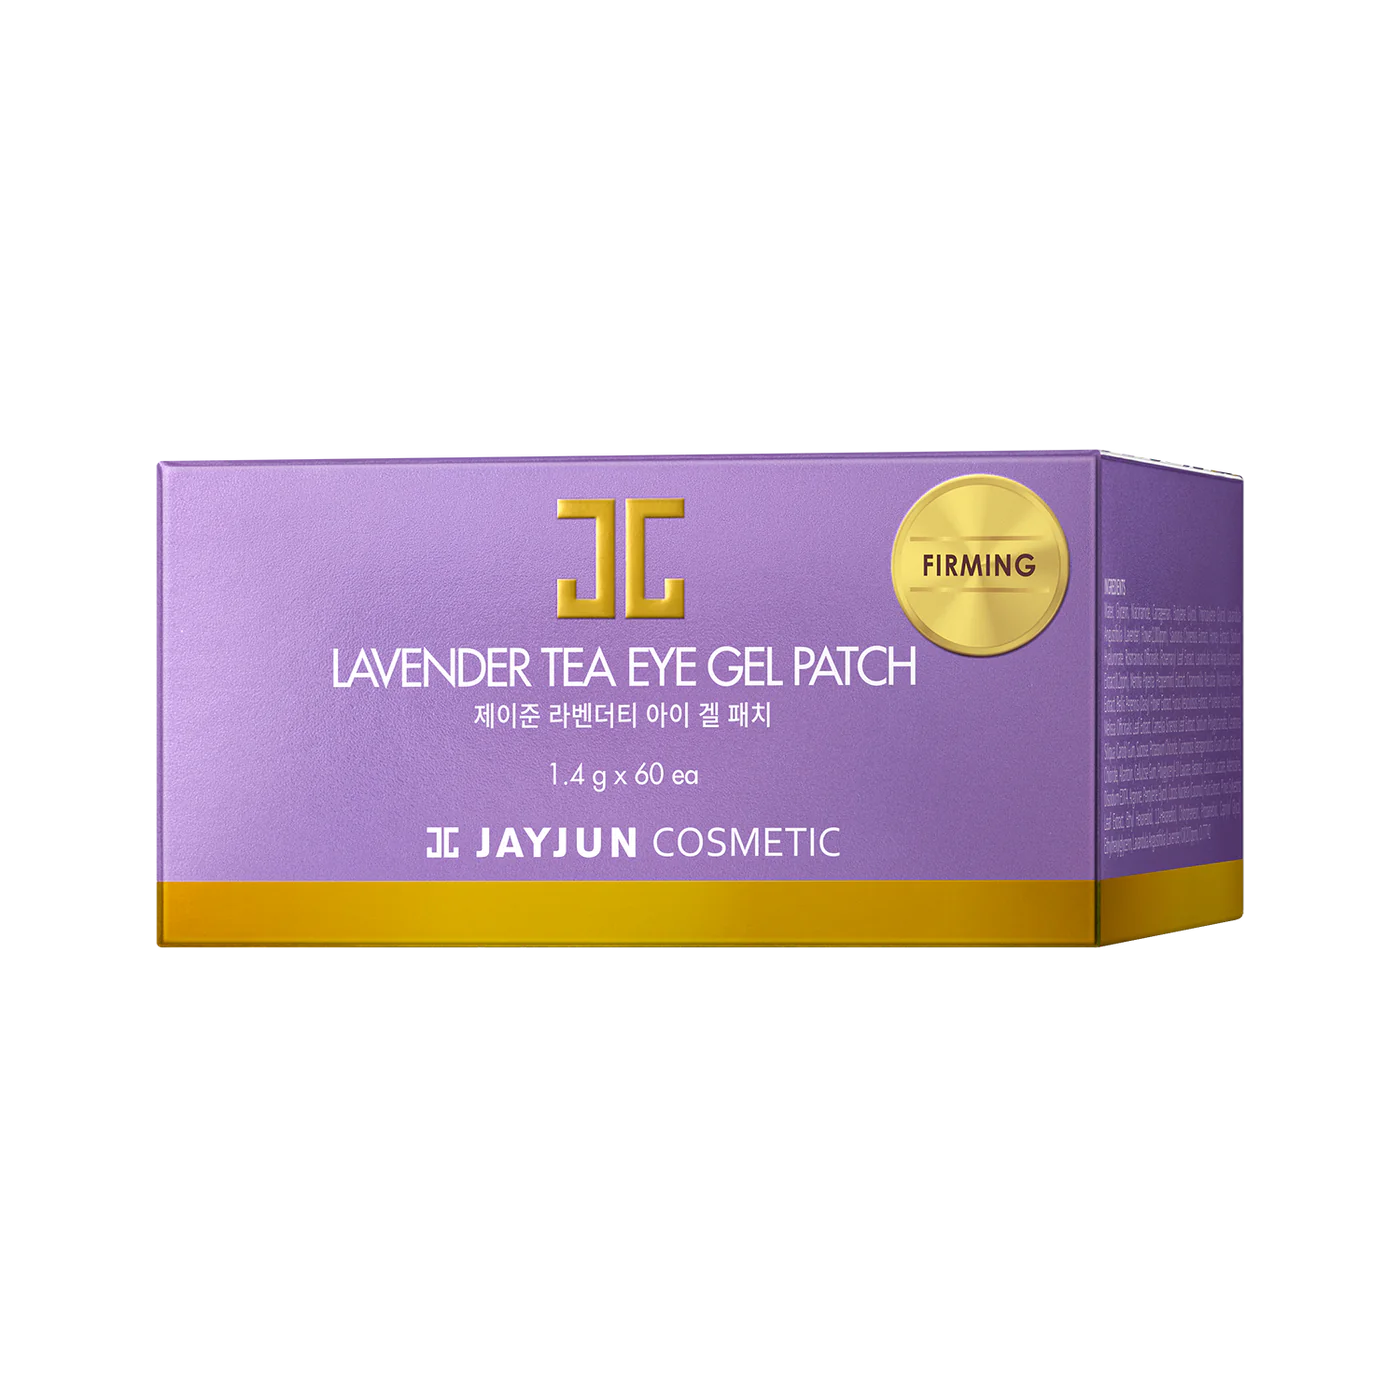 JAYJUN Cosmetic Lavender Tea Eye Gel Patch شرائح اللافندر للعين والبشرة من جيجون